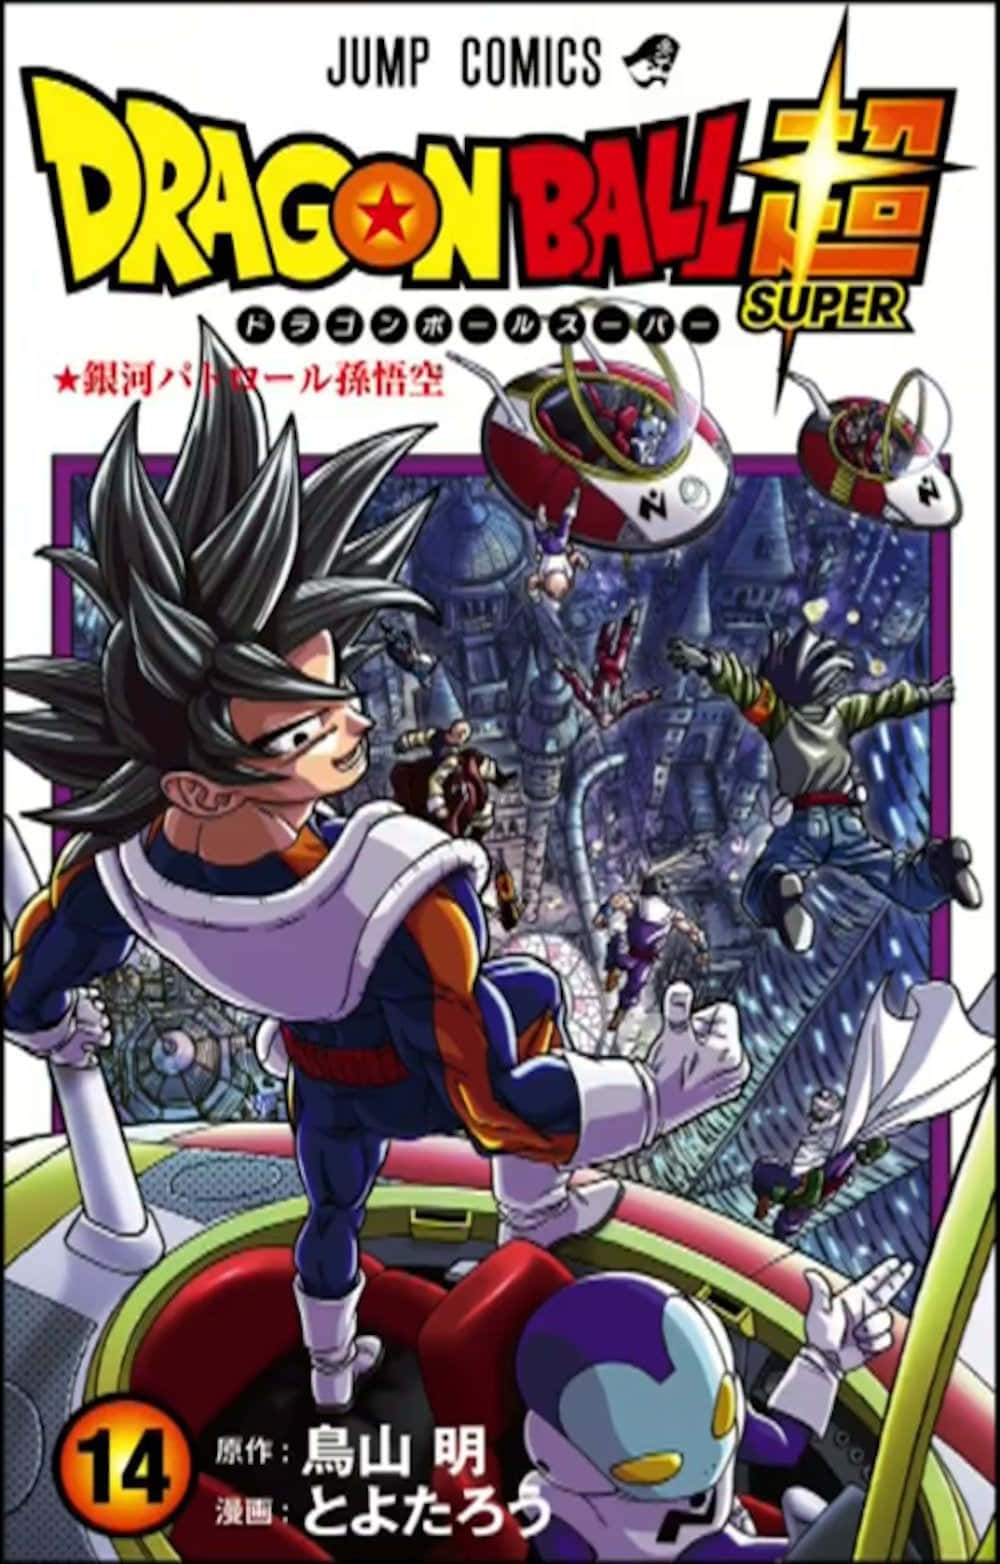 Goku faces off against Super Saiyan God Jiren in the Super Manga Series Wallpaper